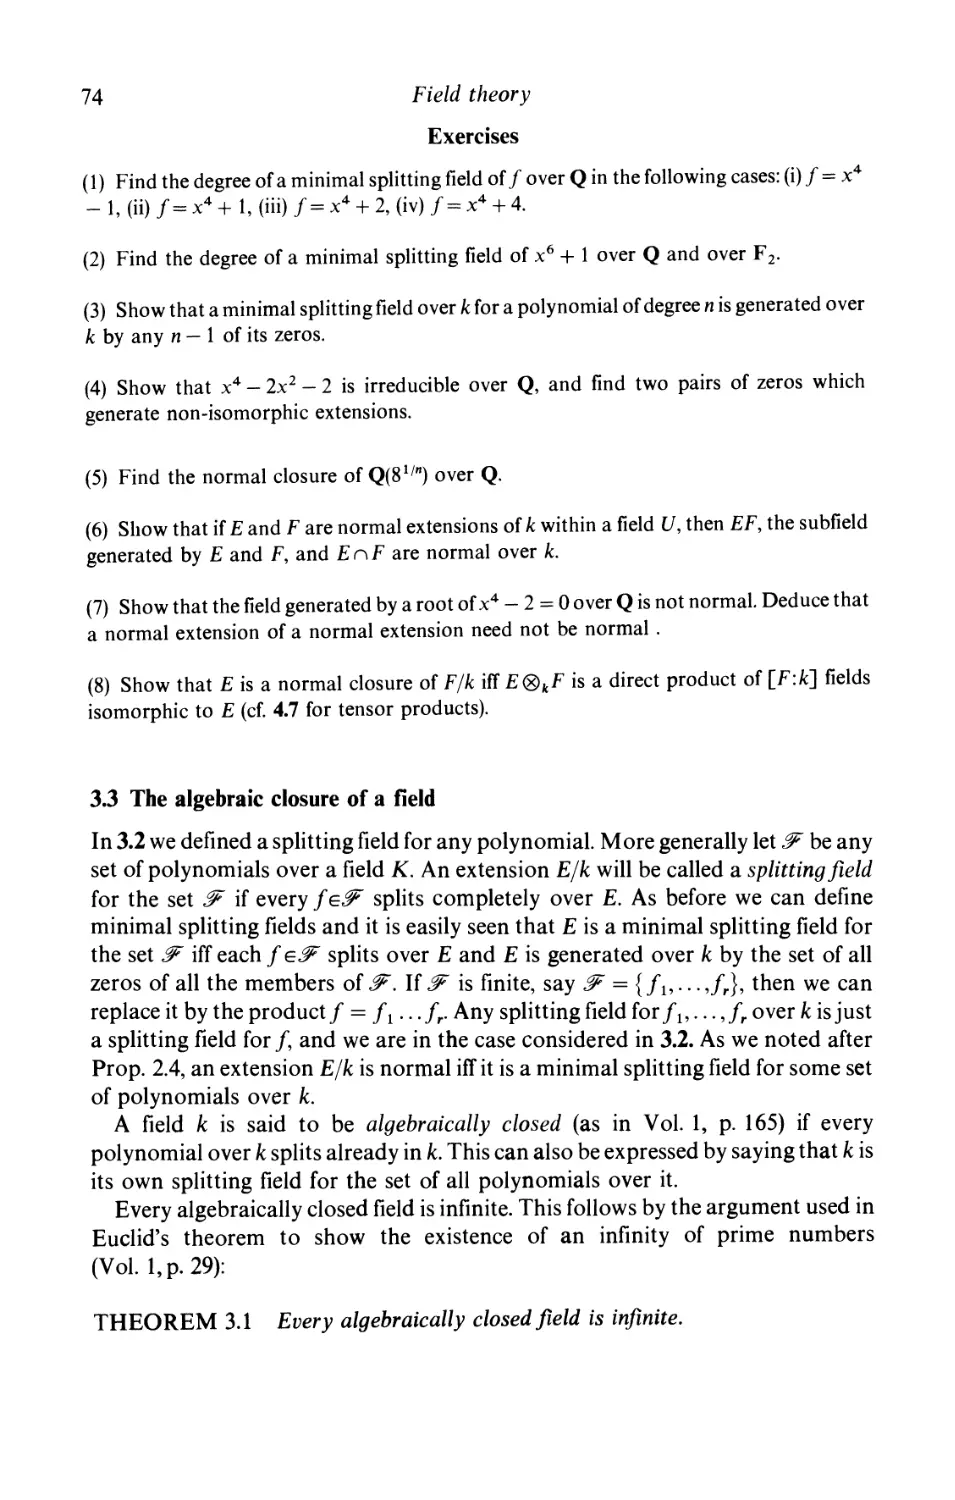 3.3 The algebraic closure of a field